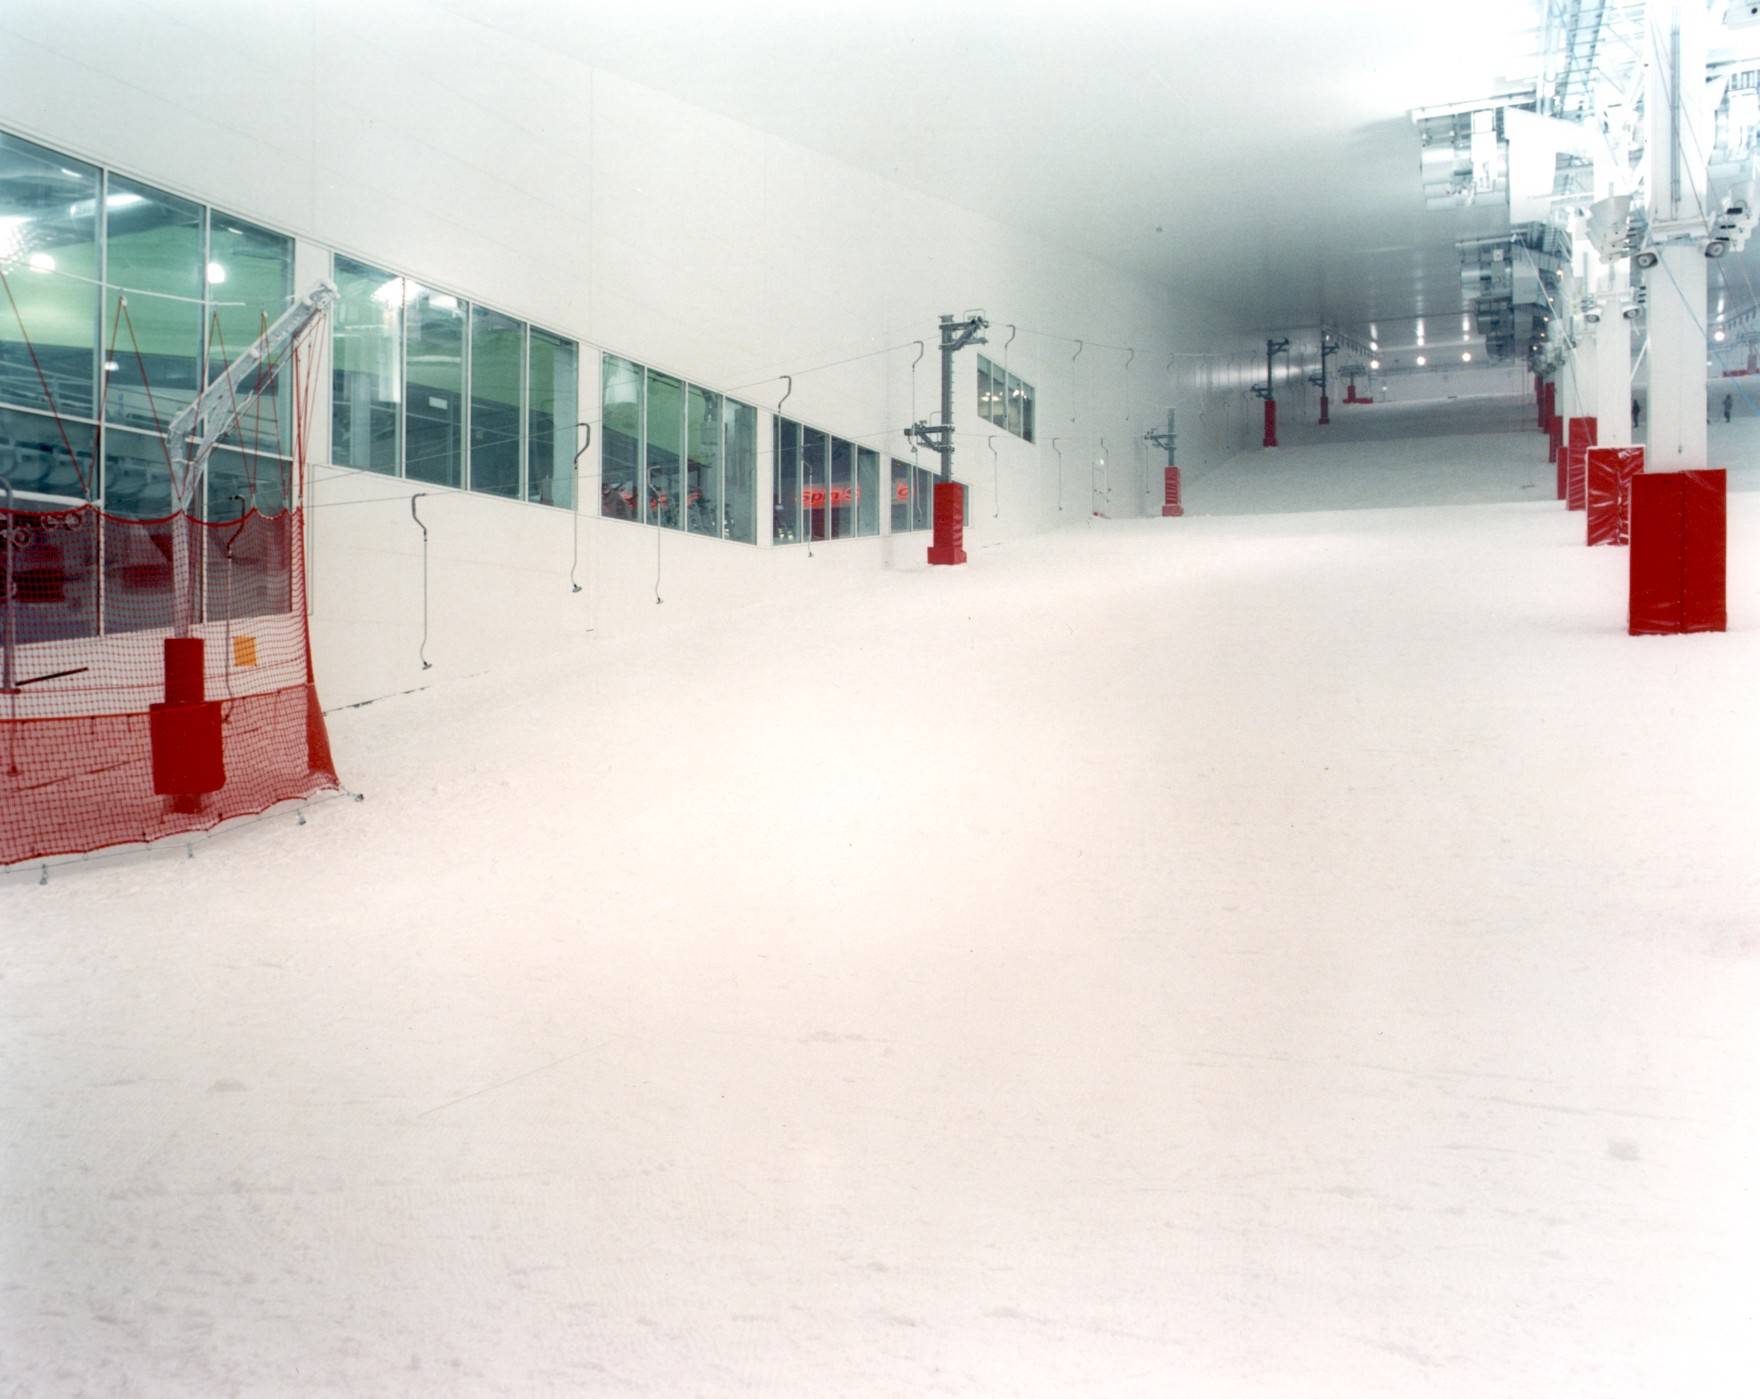 Ski slope inside Xscape Milton Keynes